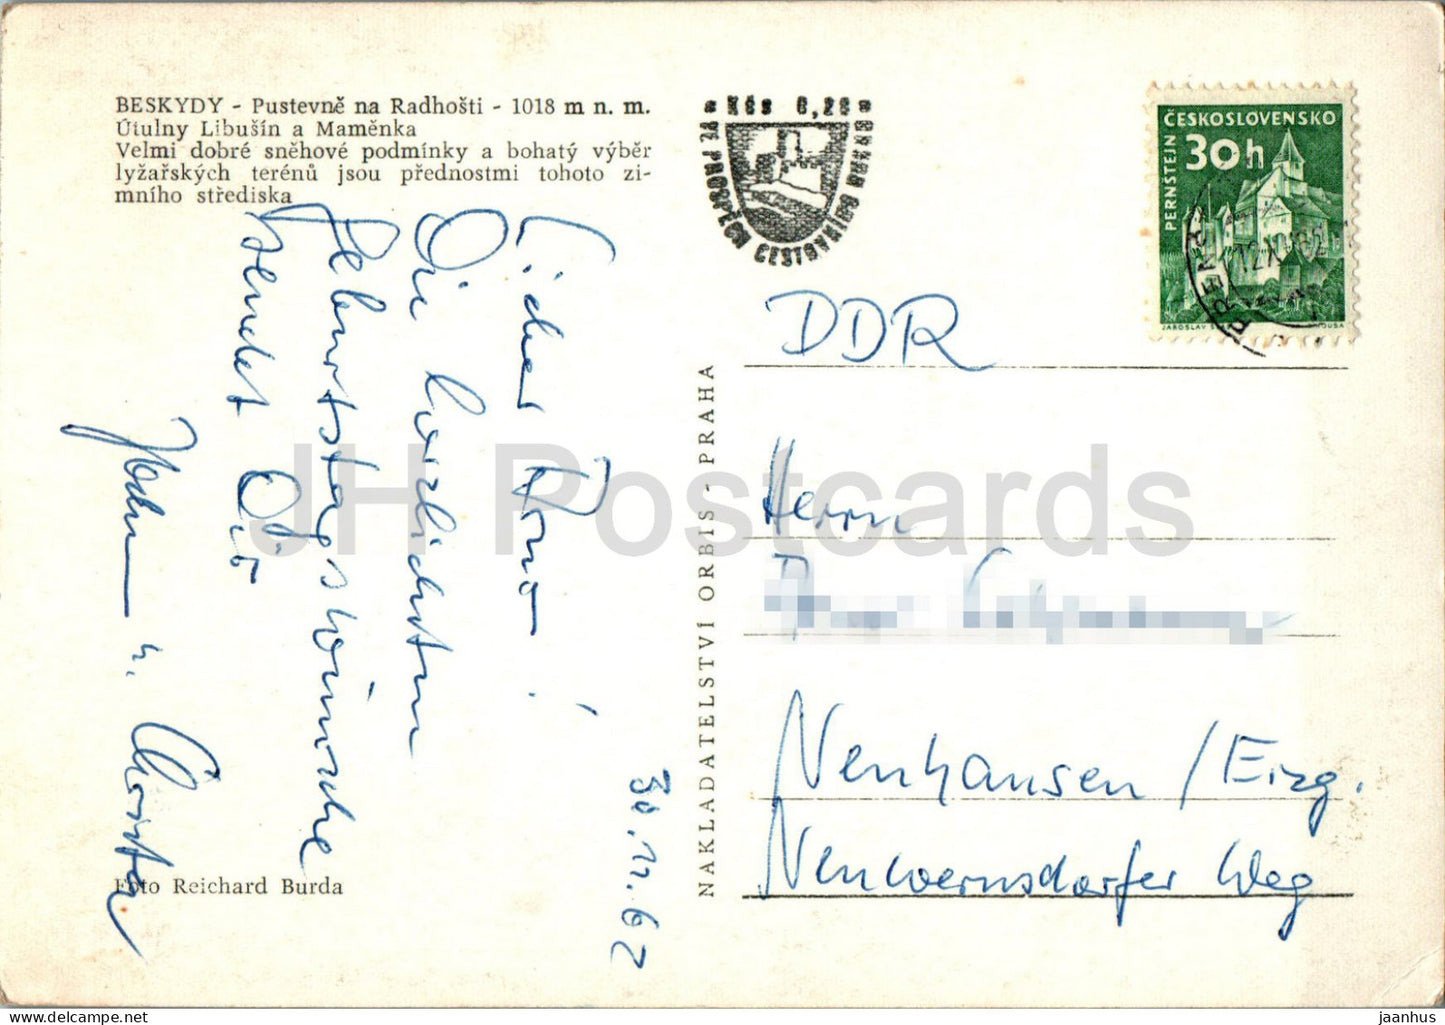 Beskydy - Pustevne na Radhosti - Hermitageon Radhosti - 1962 - République tchèque - Tchécoslovaquie - occasion